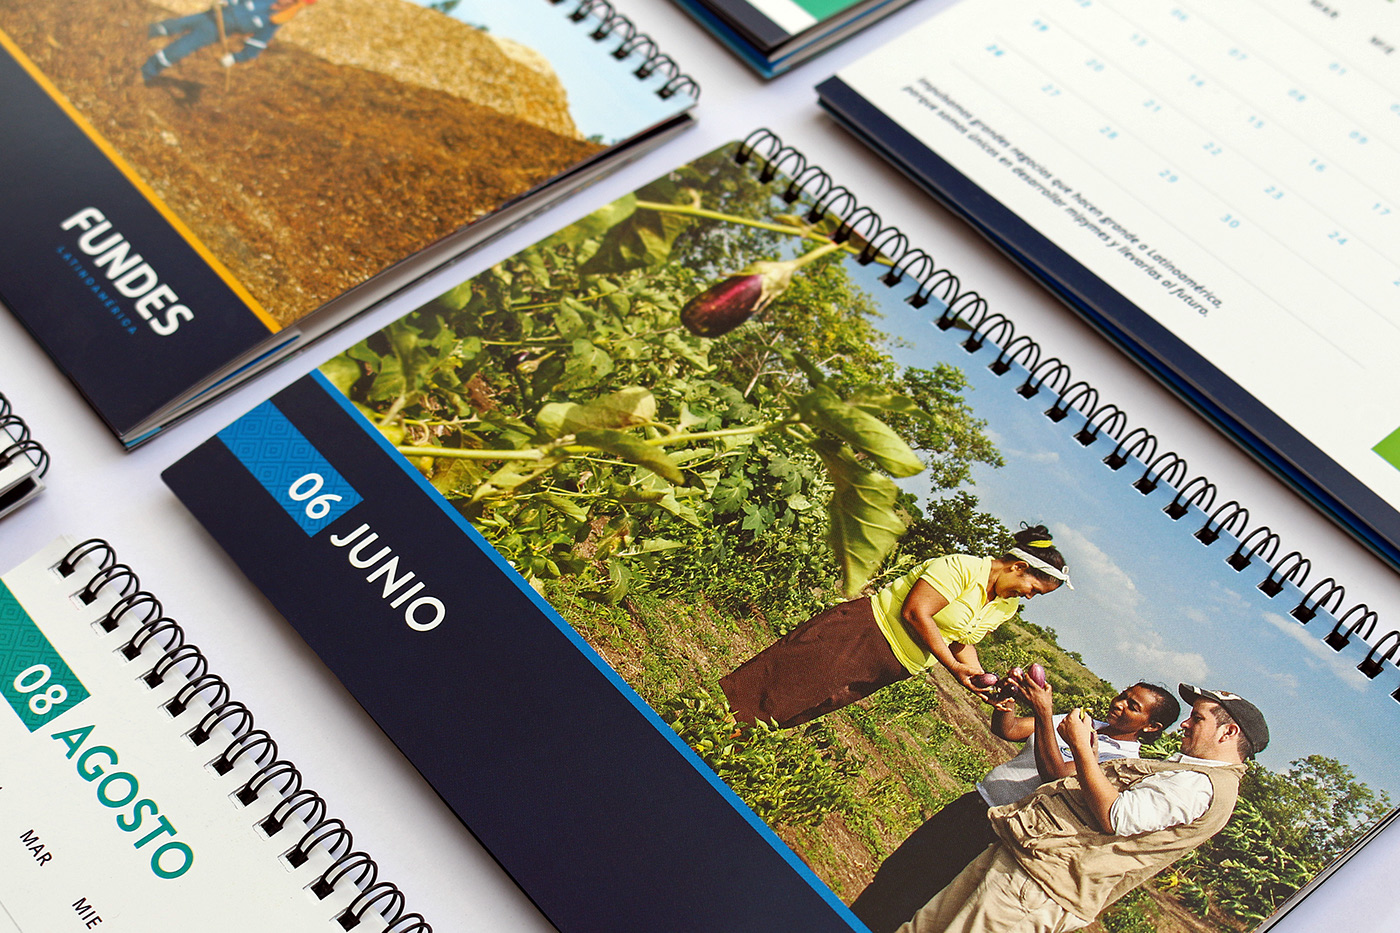 Rebrand rebranding brandbook brand book guidelines Patterns progress colors guides Costa Rica logo calendar environmental graphics letterhead